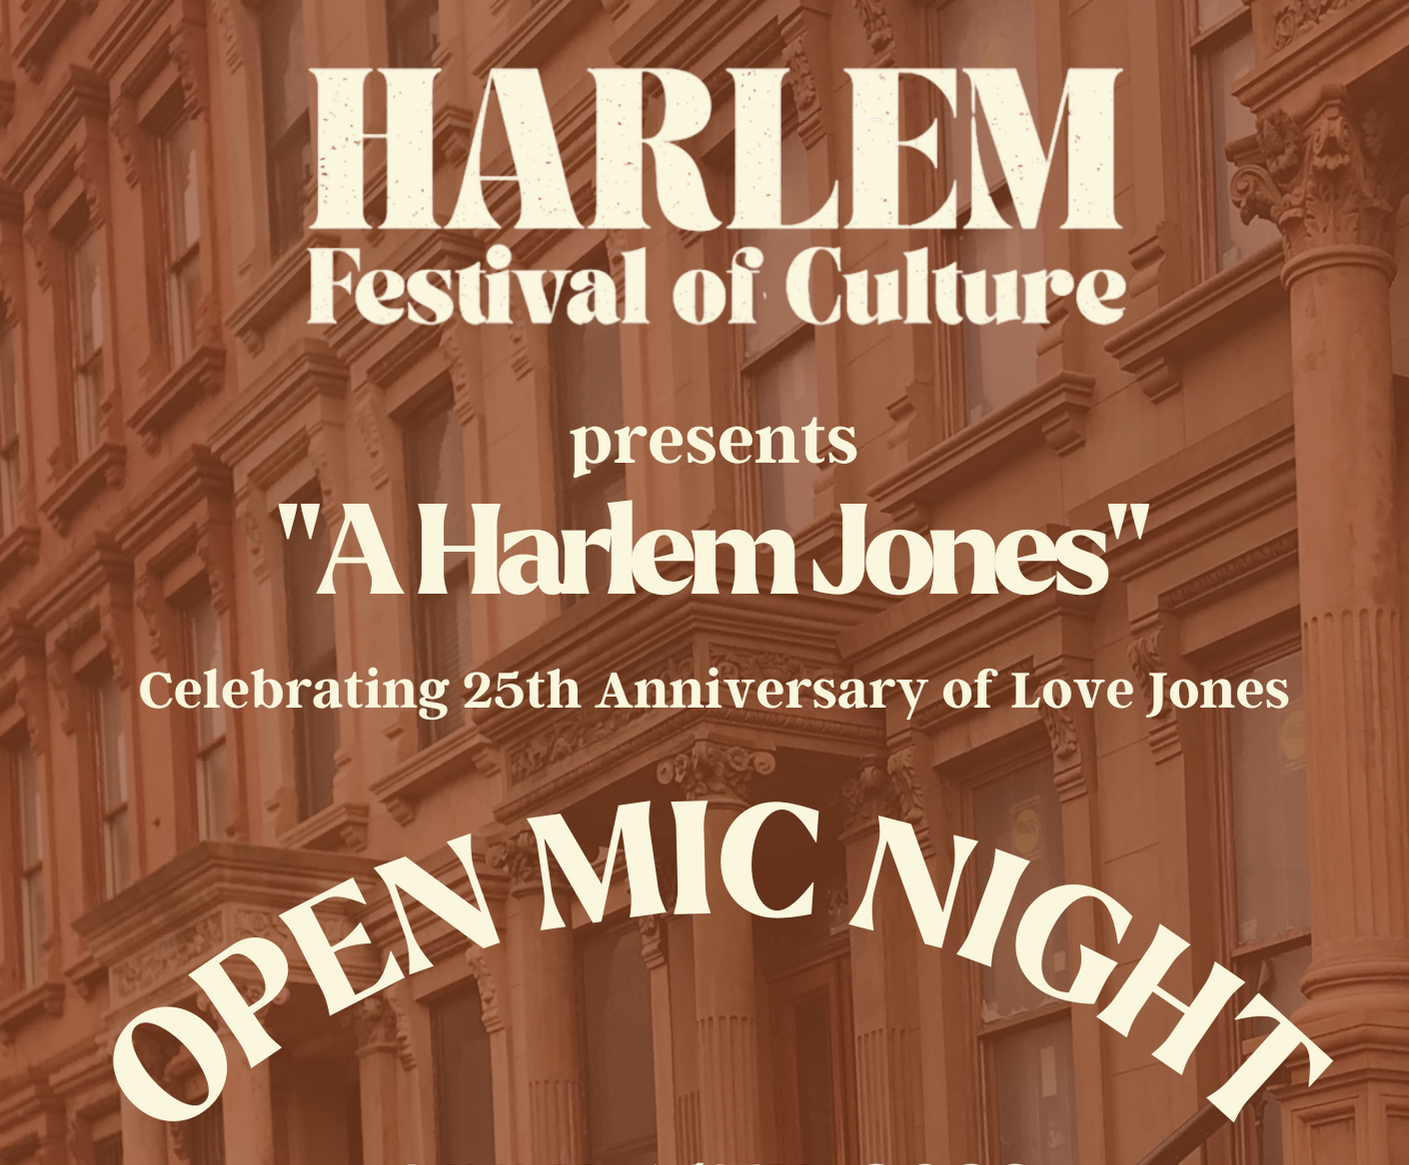 A Harlem Jones